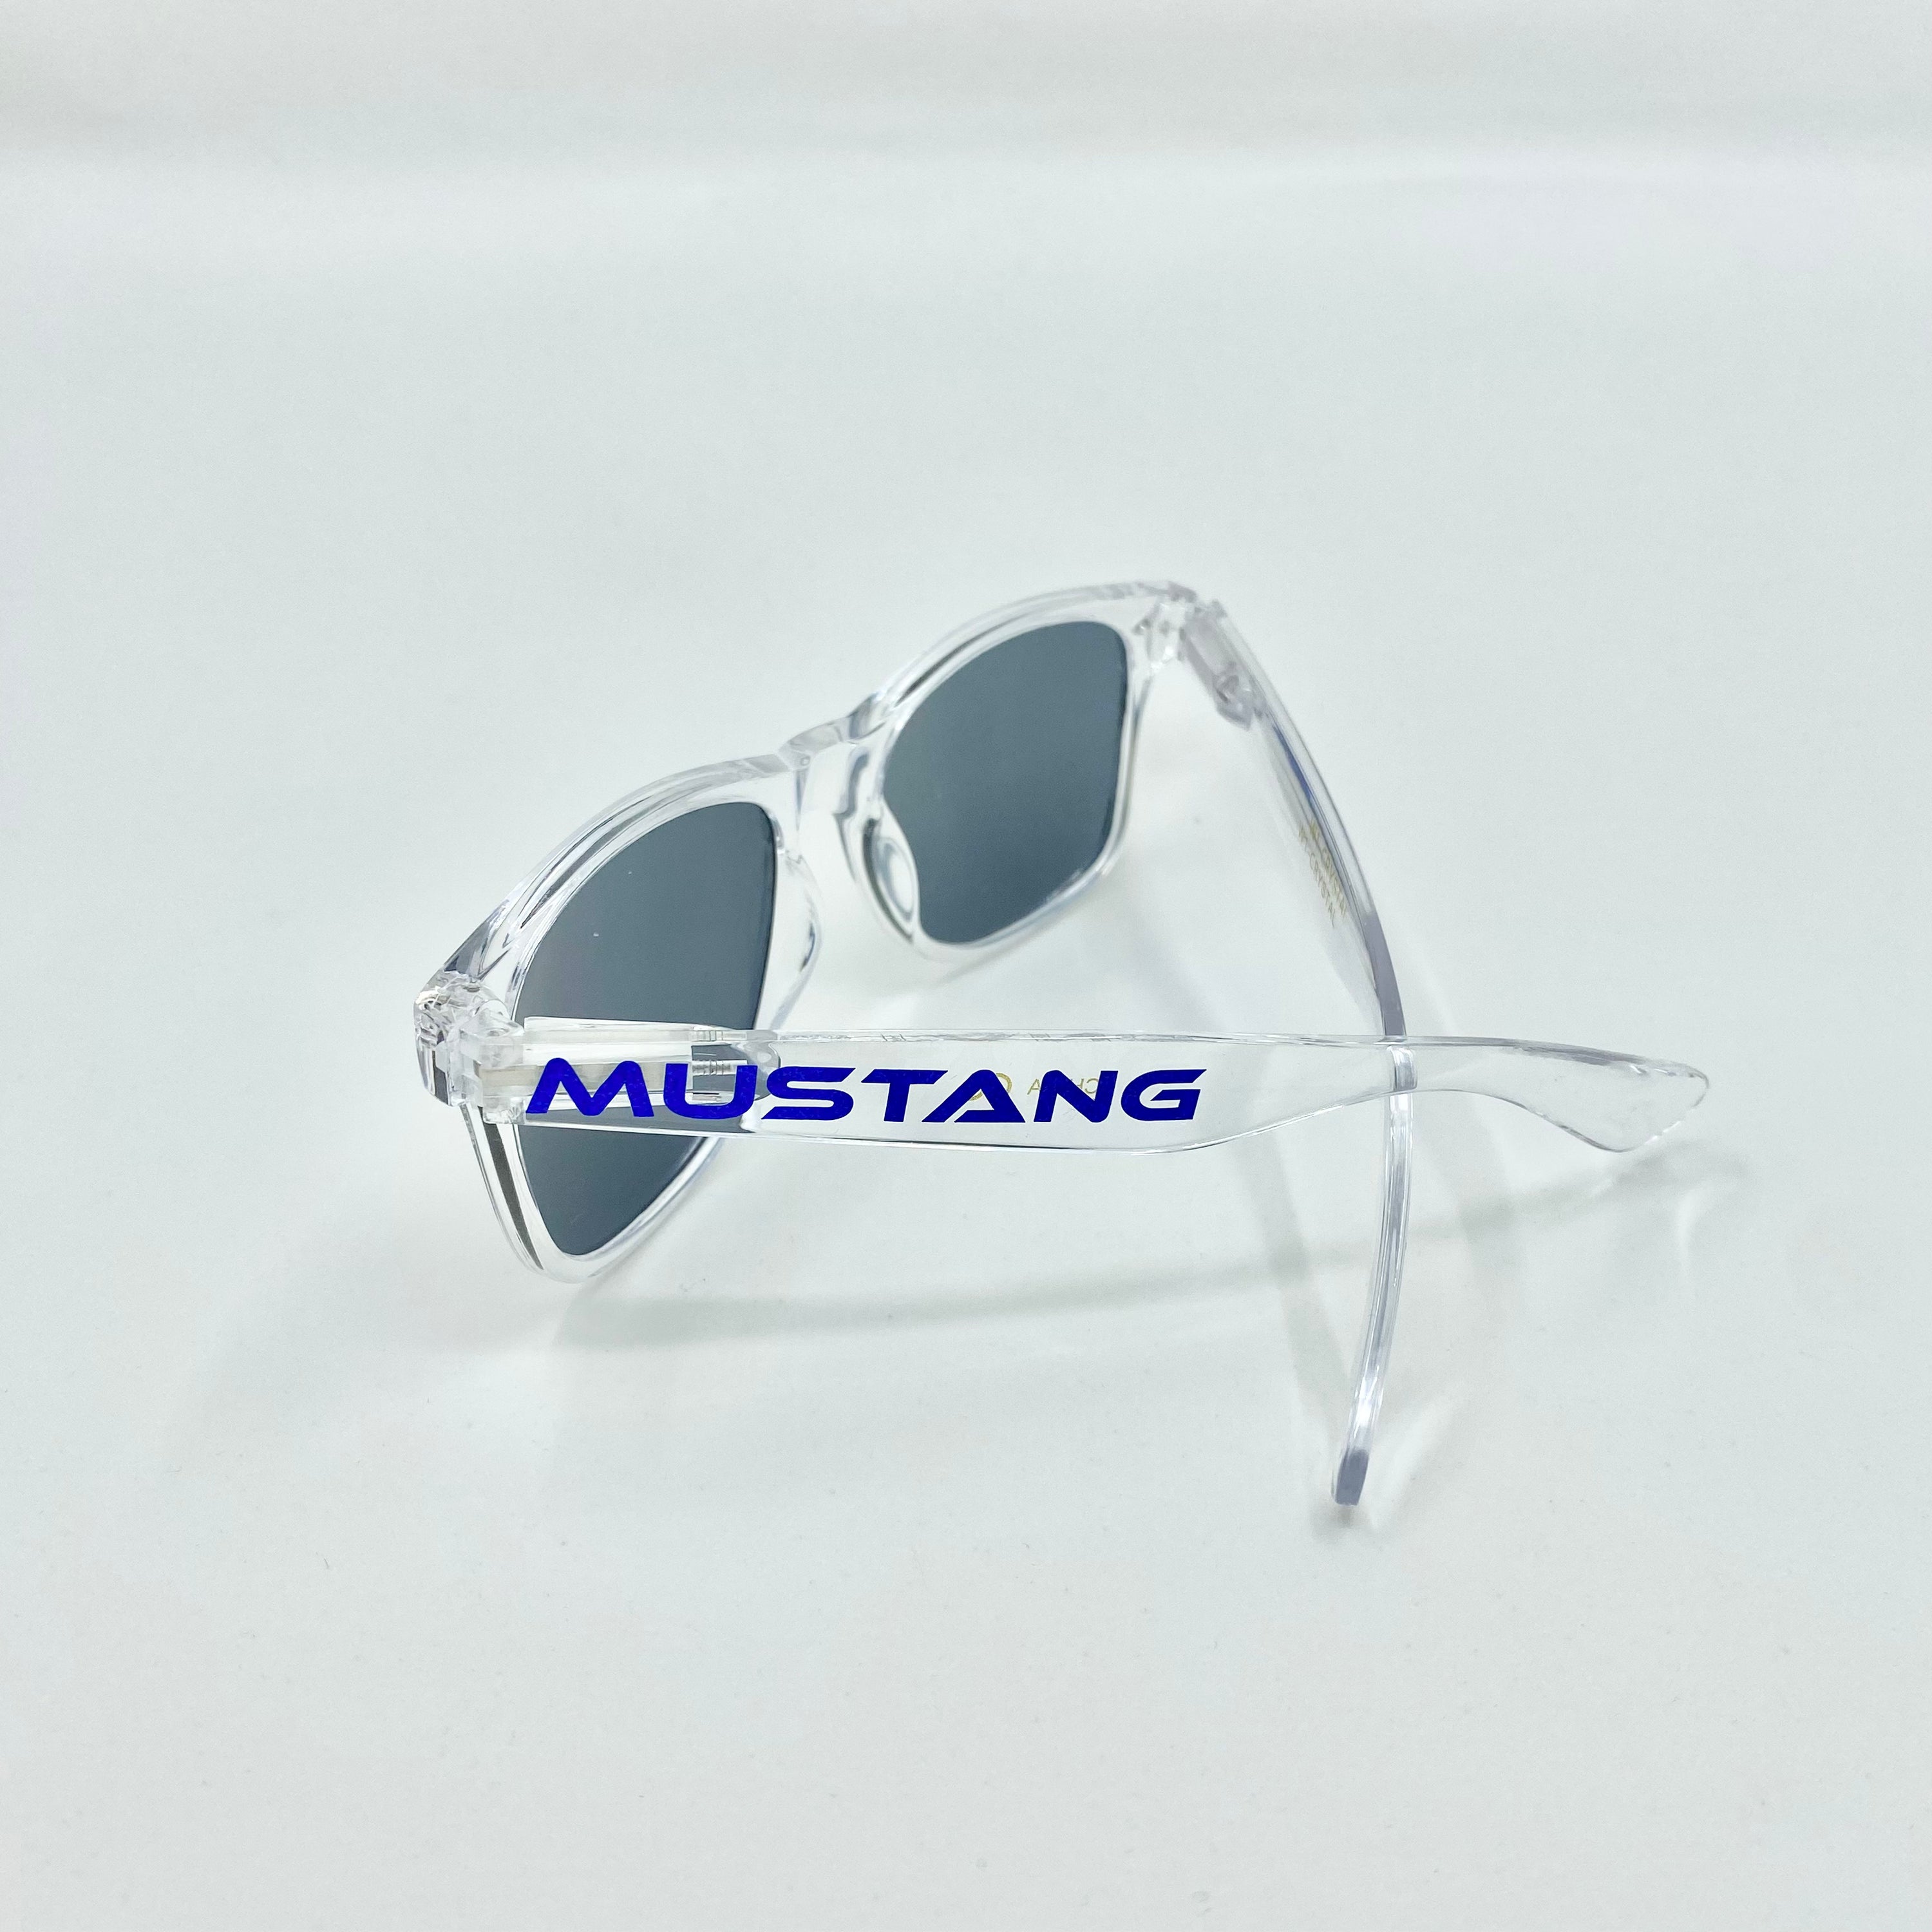 Mustang Sunglasses